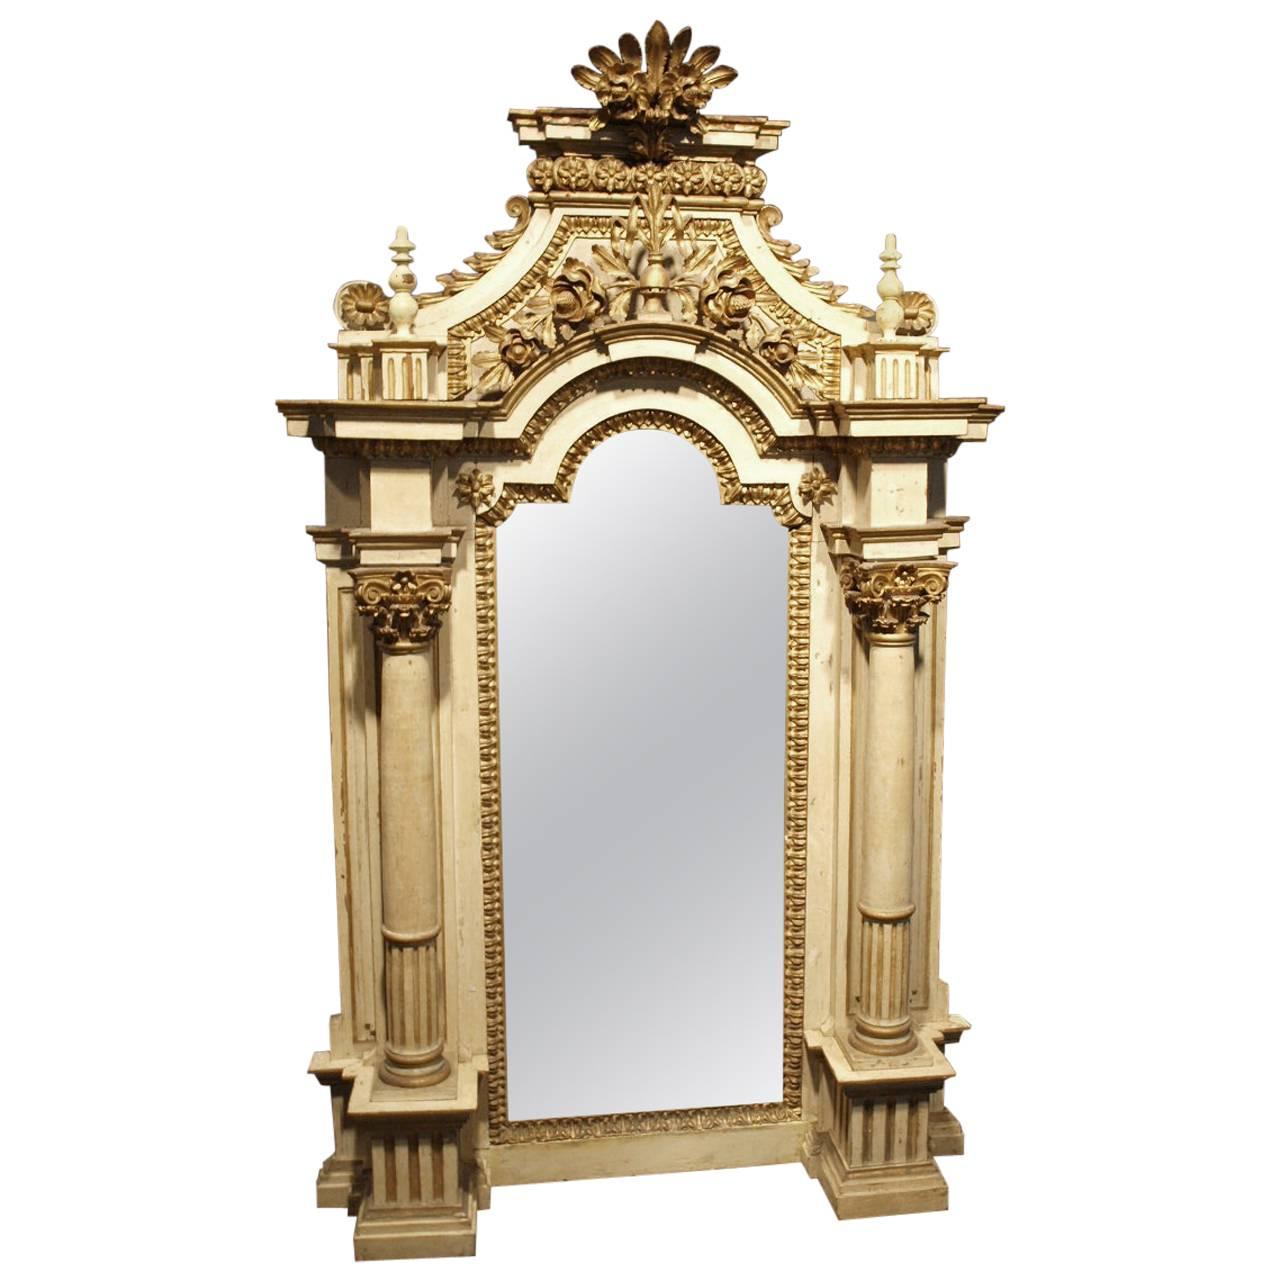 Stunning 18th Century French Louis XVI Period Altar Frame Mirror